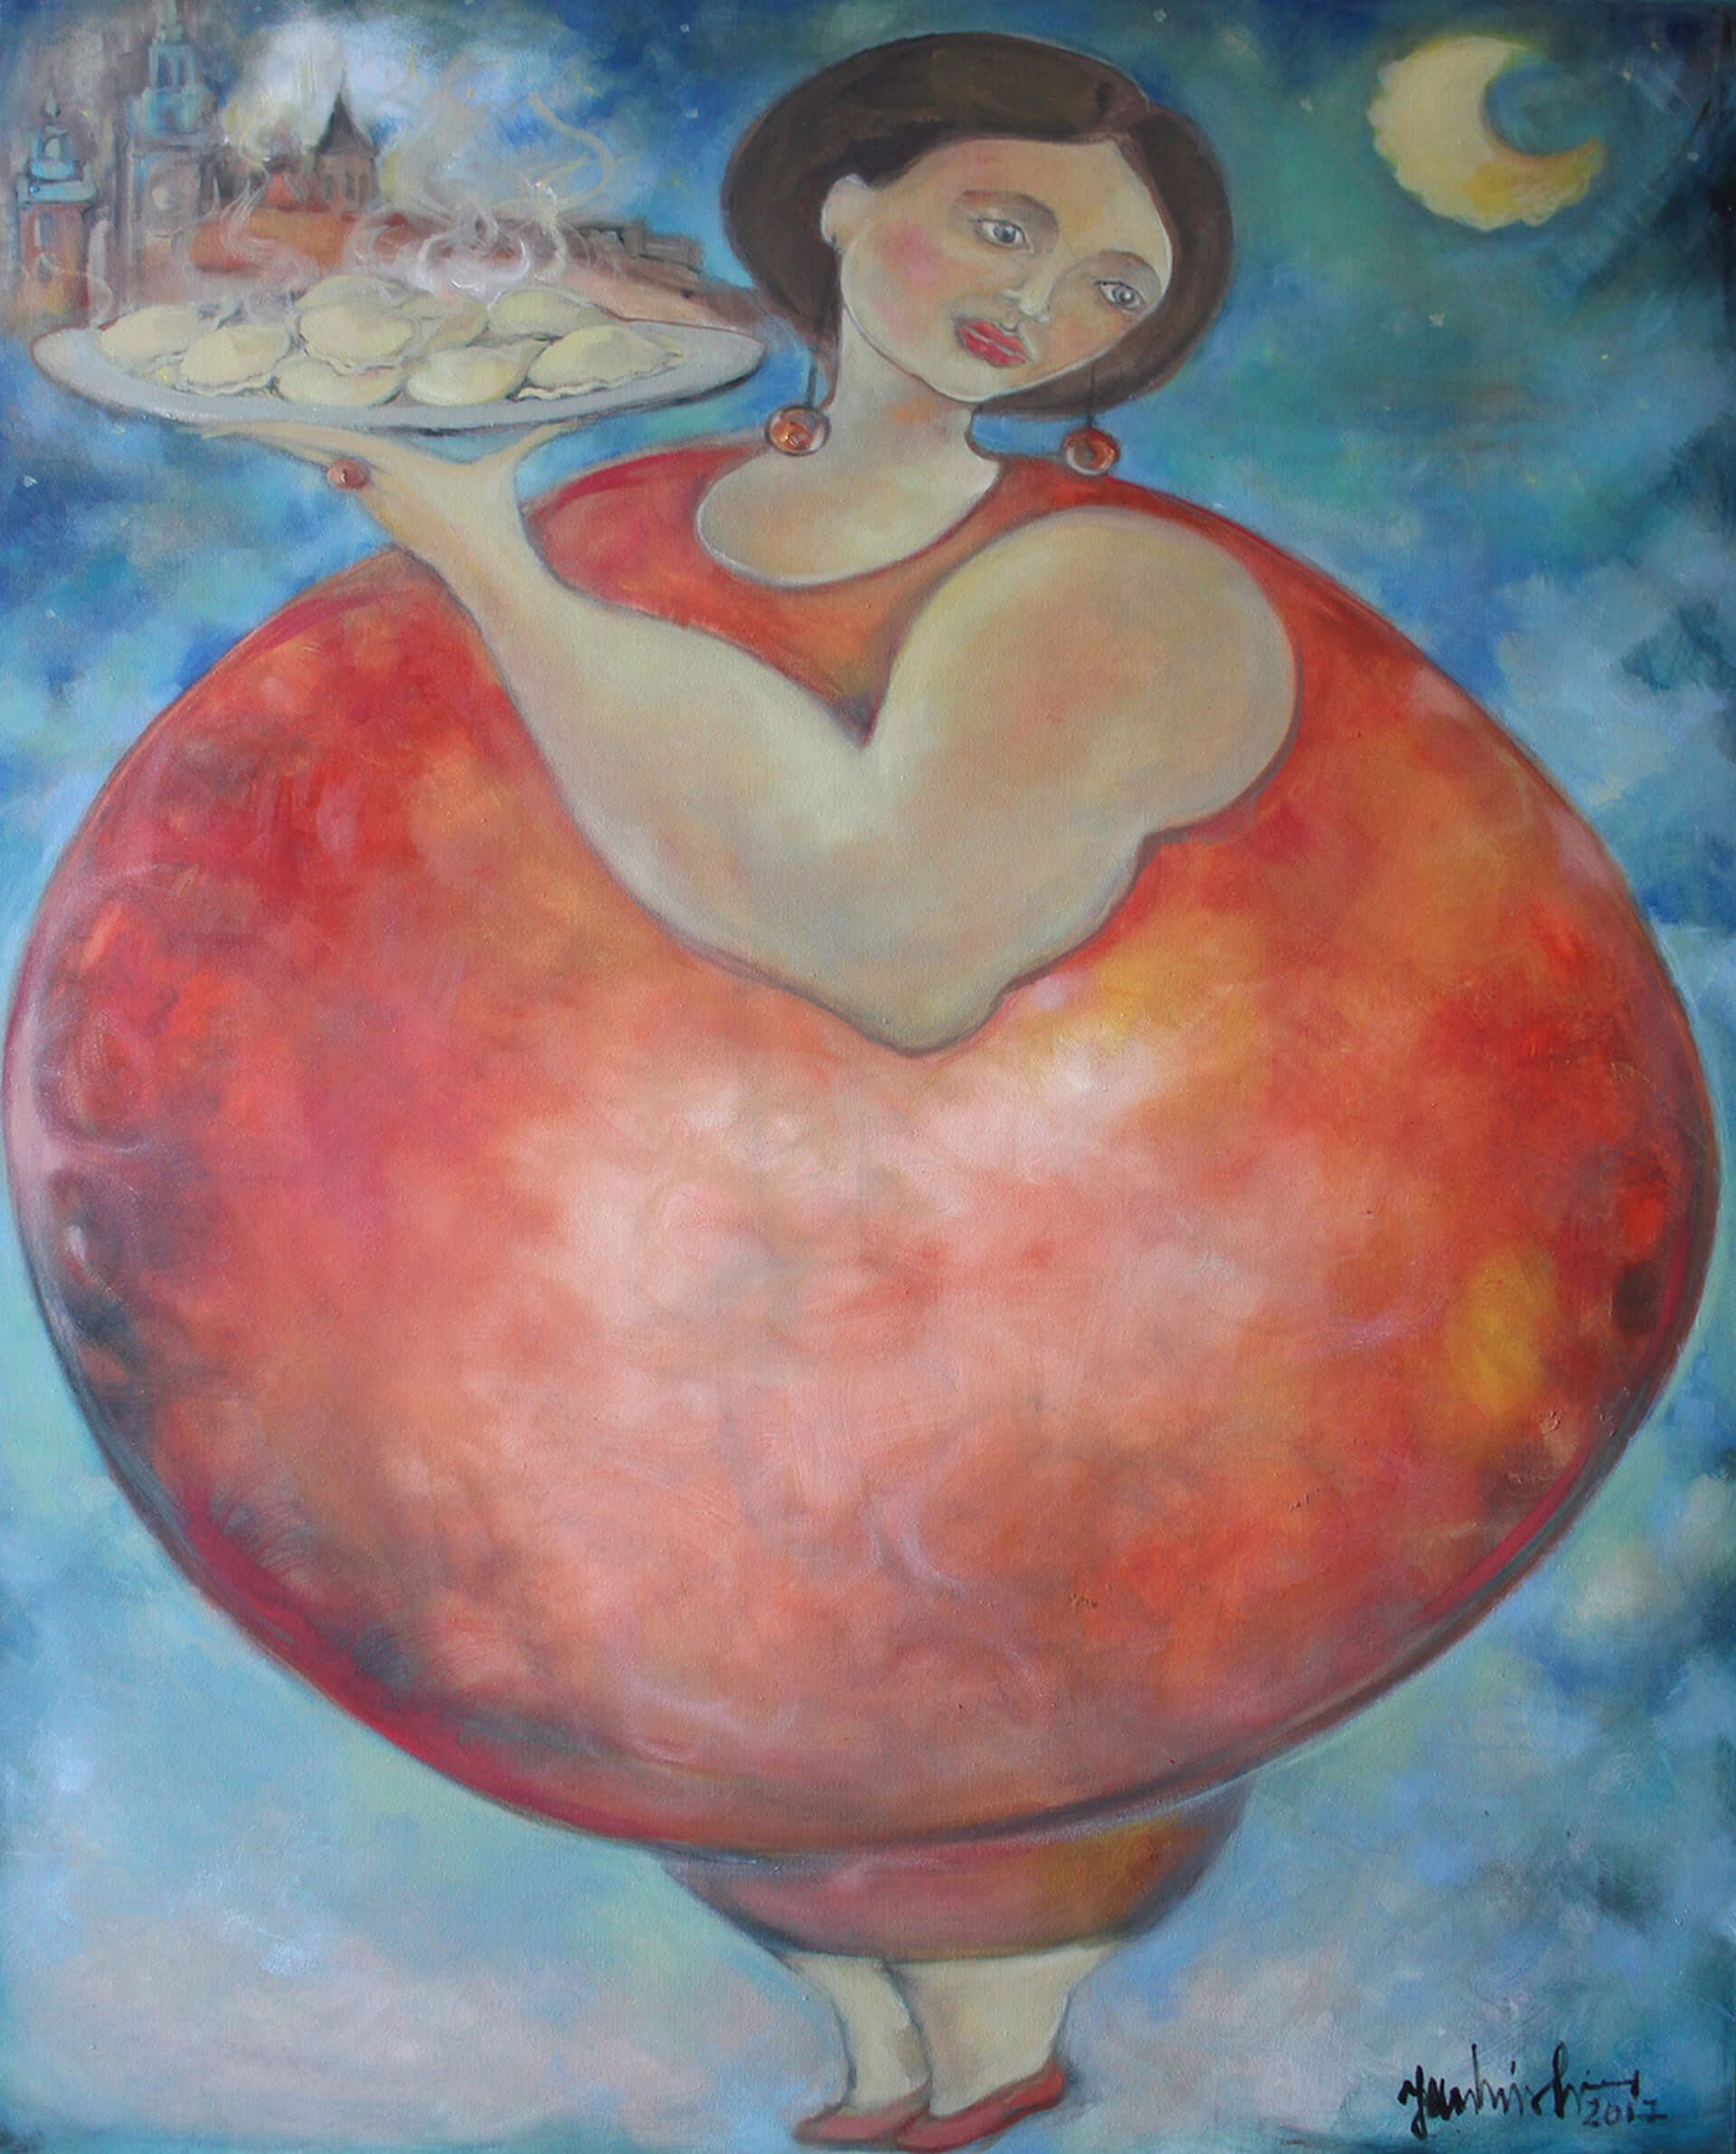 Lady with dumplings. 60x80 cm. Oil on canvas. 